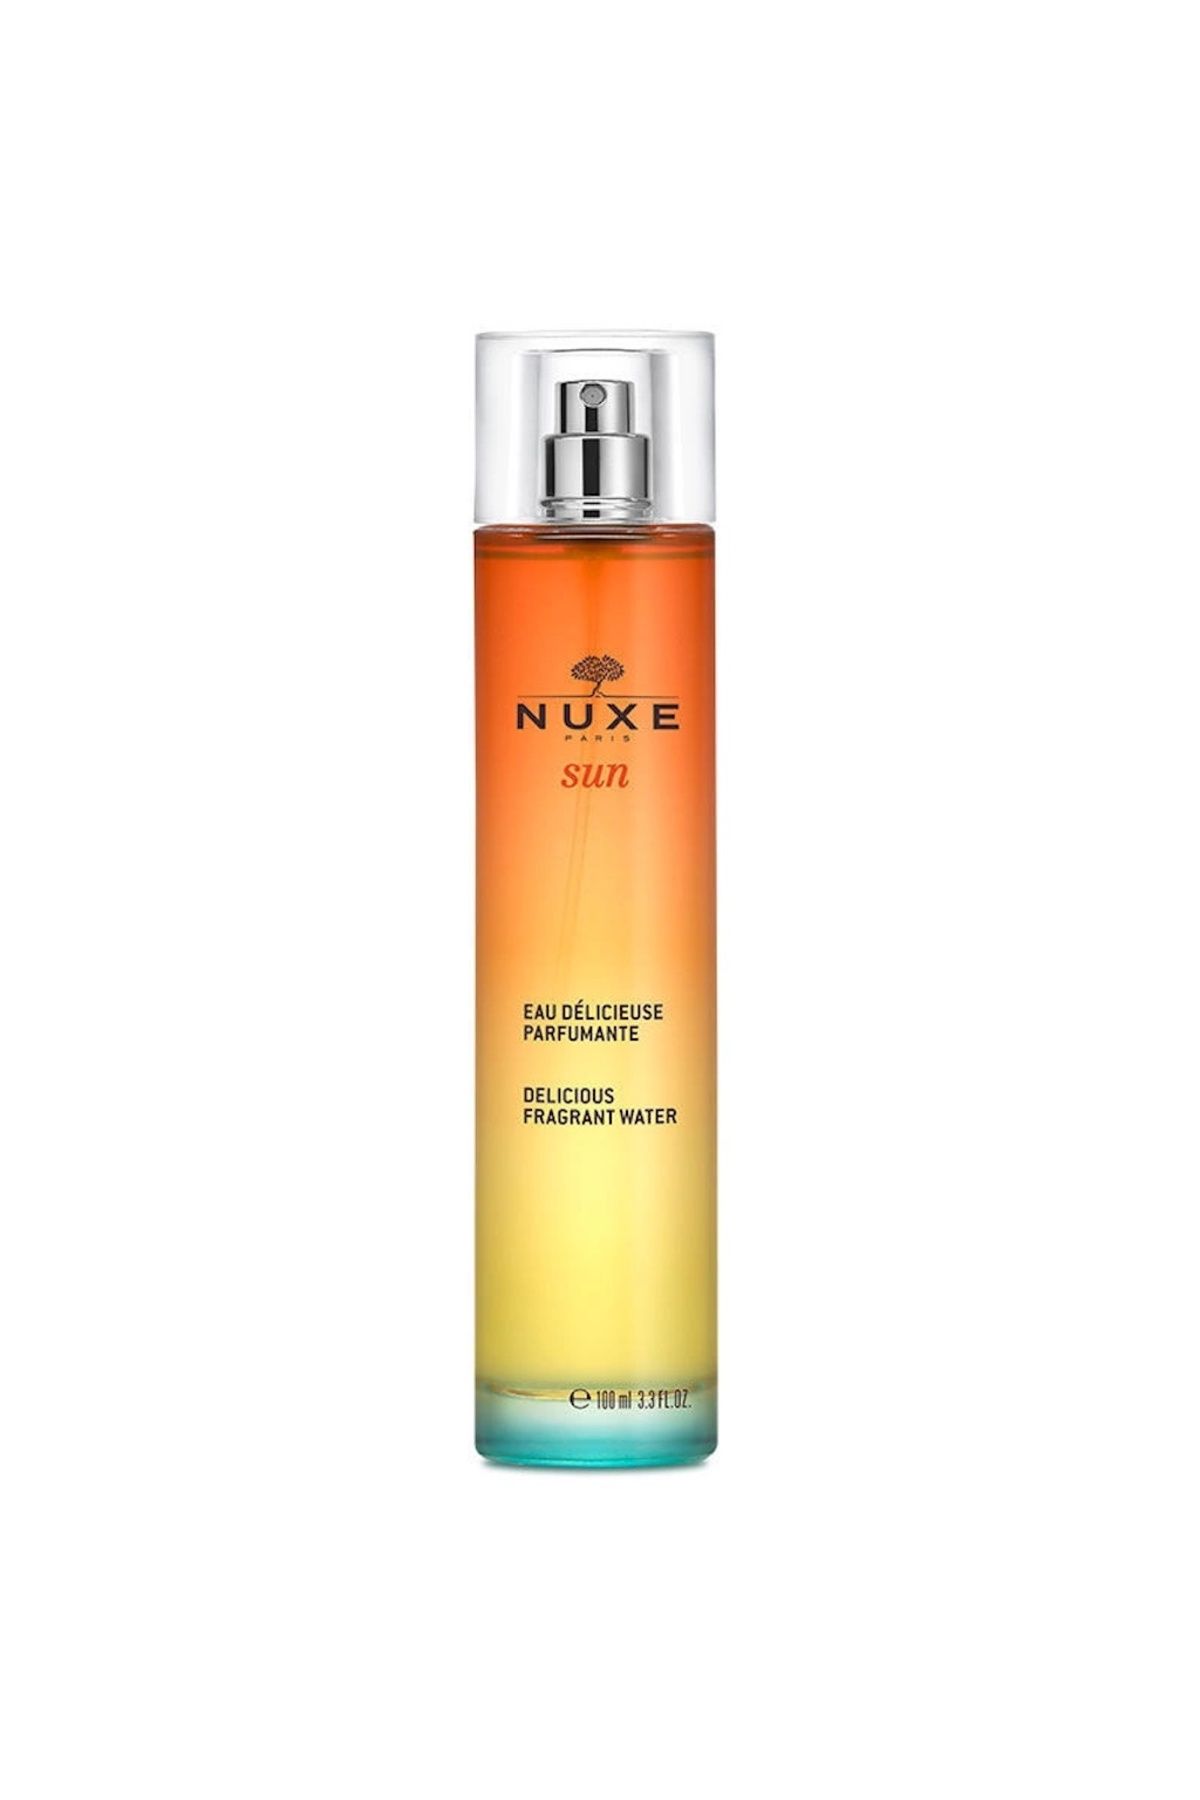 Nuxe استهلال عطر ادو دلیسیوز پرفومانت ناتورال بادی اسپری (100 میلی لیتر)